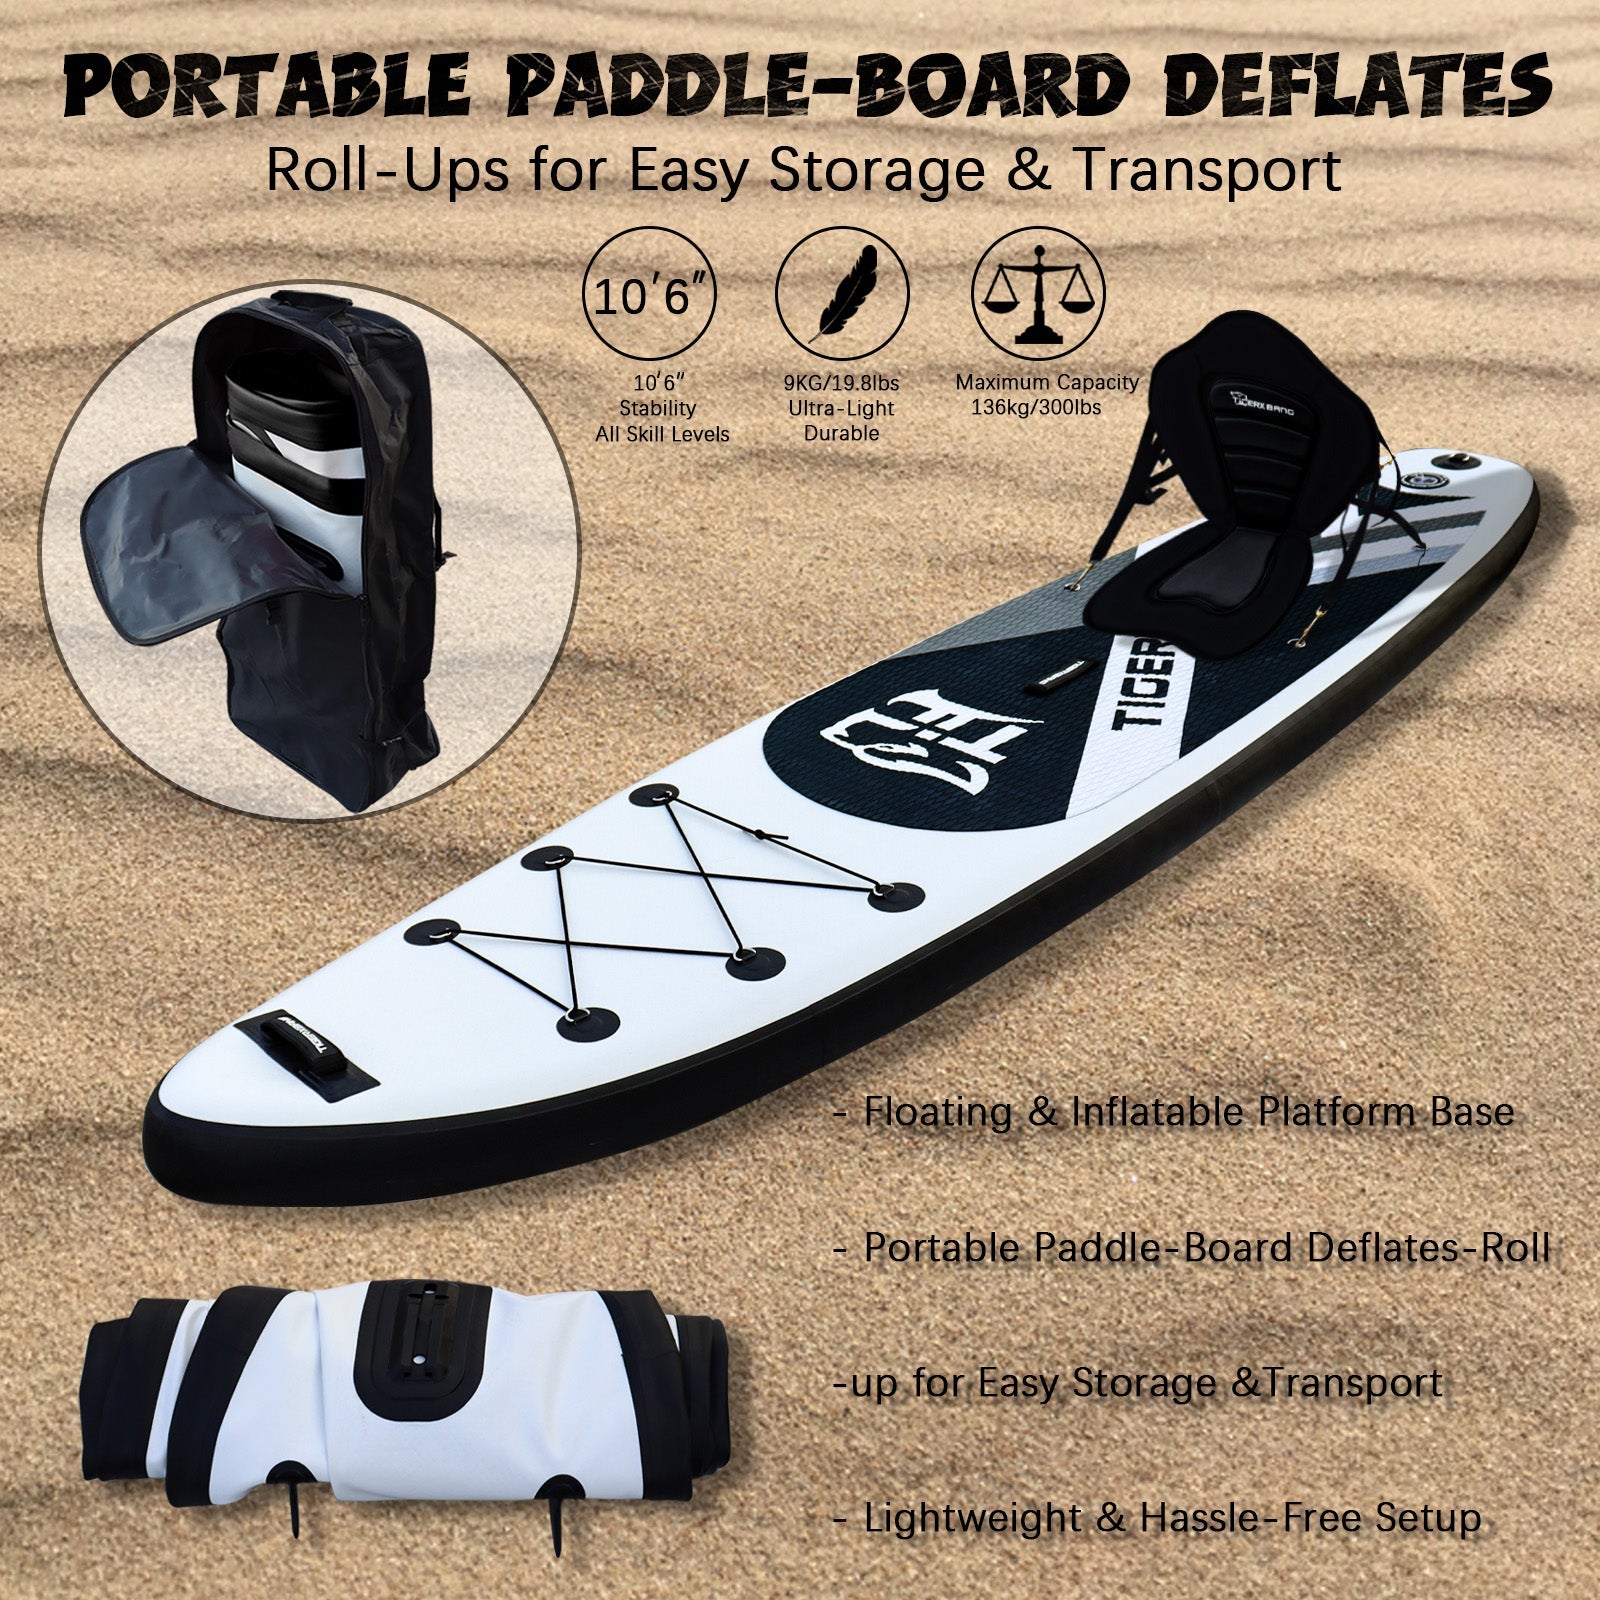 Tabla Paddle Surf Hinchable TIGERXBANG Arrow 320cm